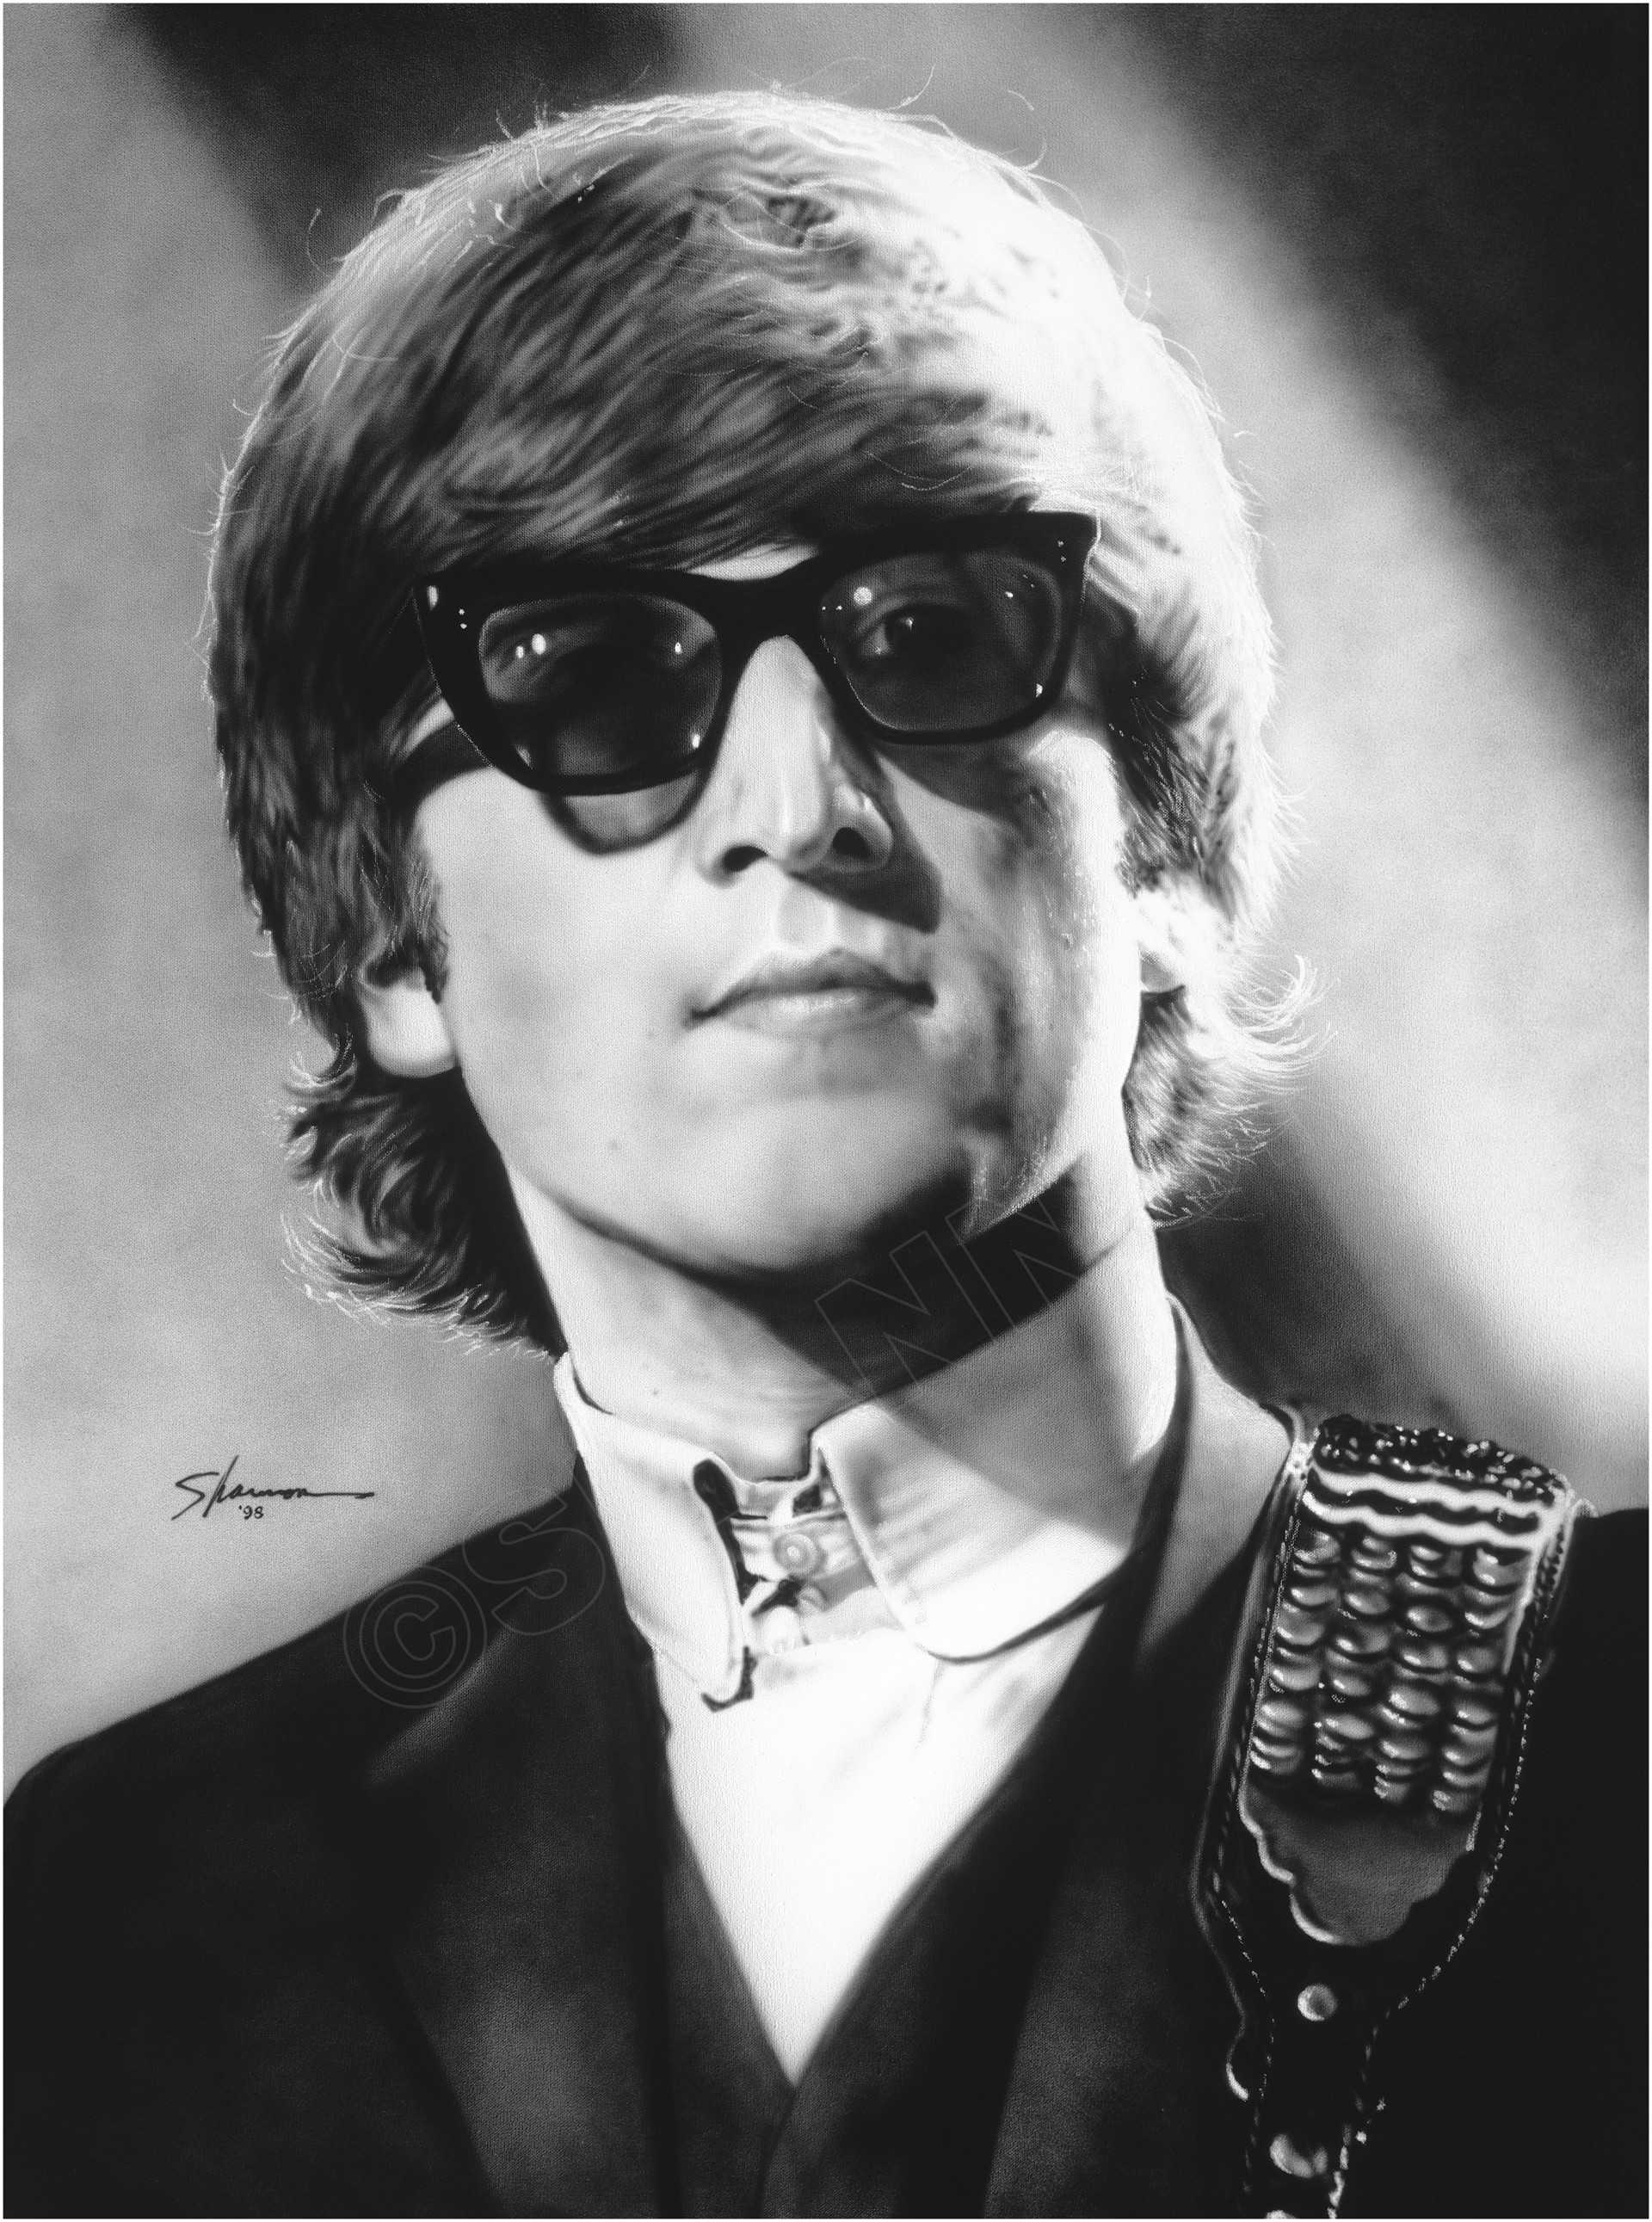 John ‘65 by Shannon The World's Greatest Beatles Artist